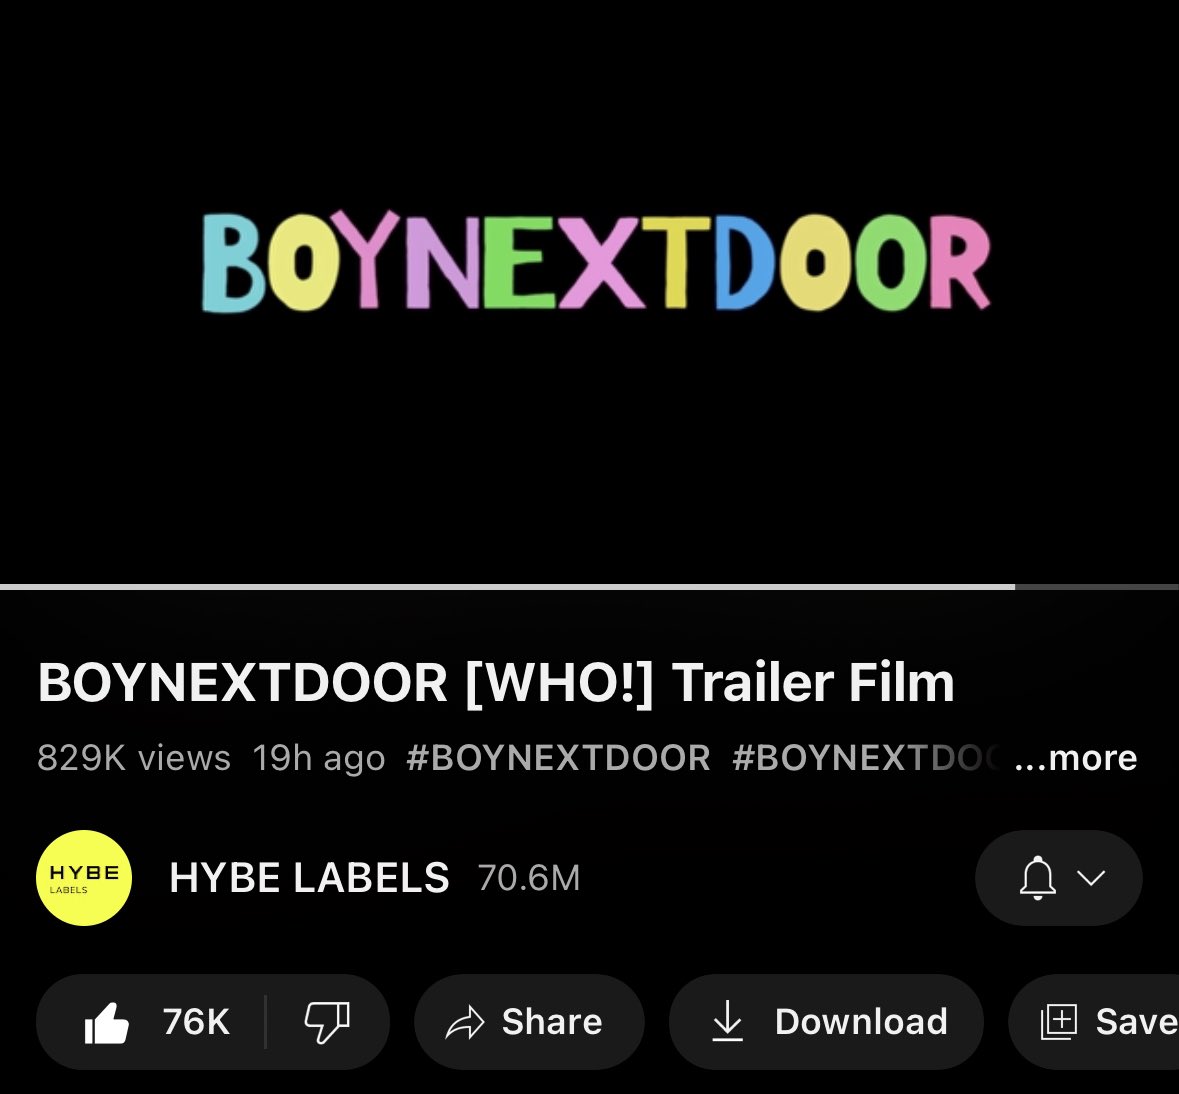 [NEWS] #BOYNEXTDOOR_TRAILERFILM  has reached 800K+ Views!